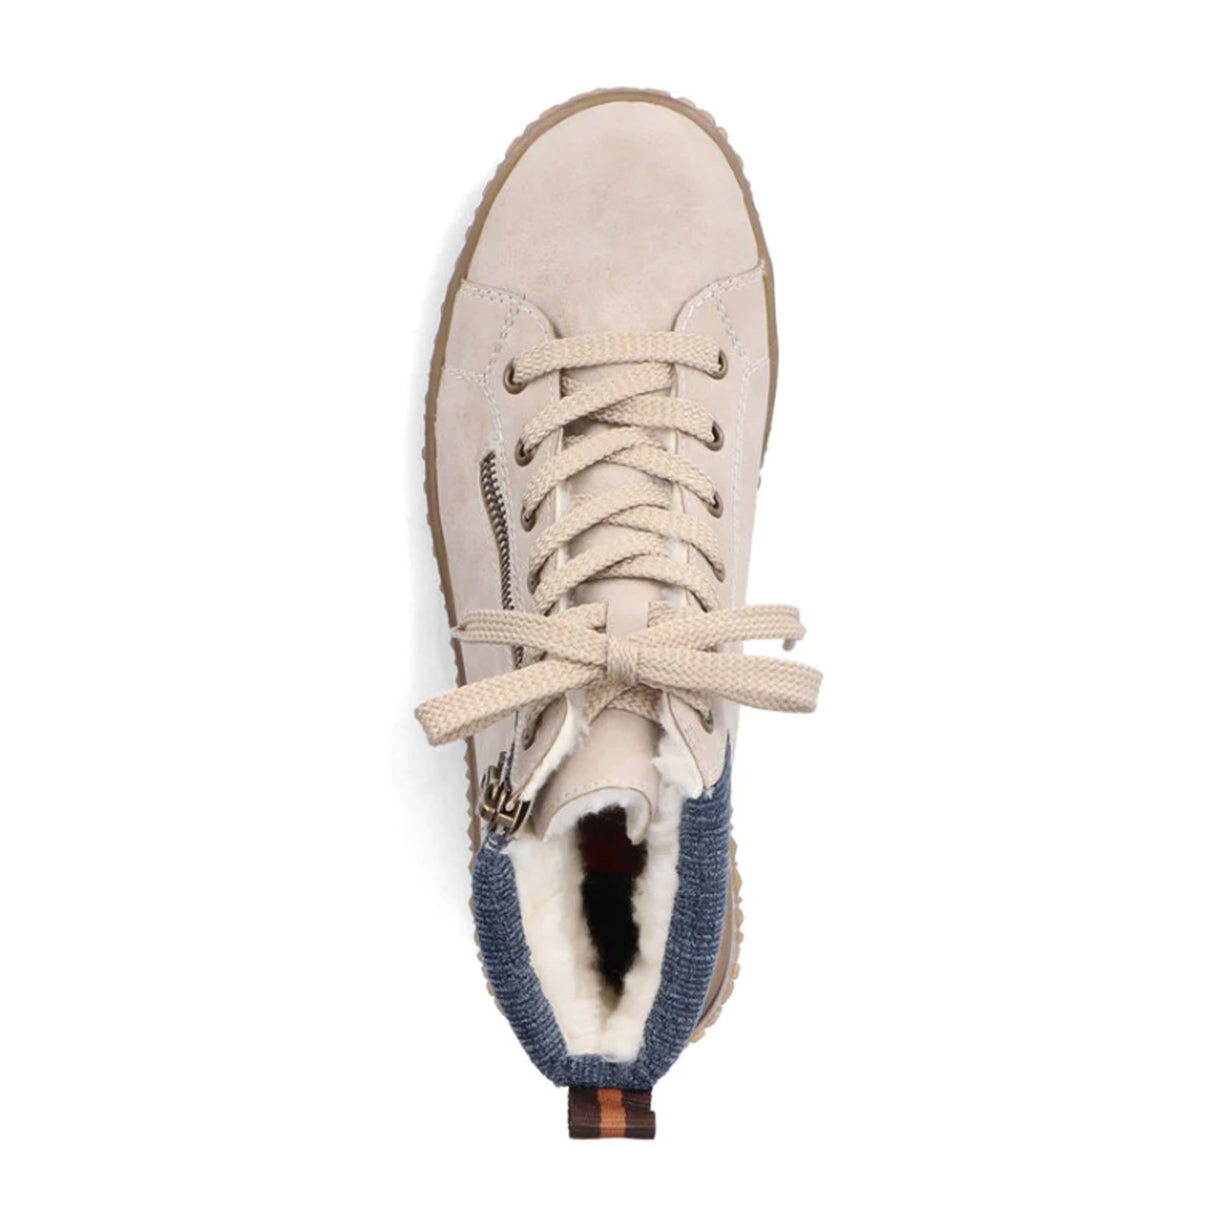 Rieker Cordula Z4209 Ankle Boot (Women) - Champignon/Denim Boots - Fashion - Ankle Boot - The Heel Shoe Fitters